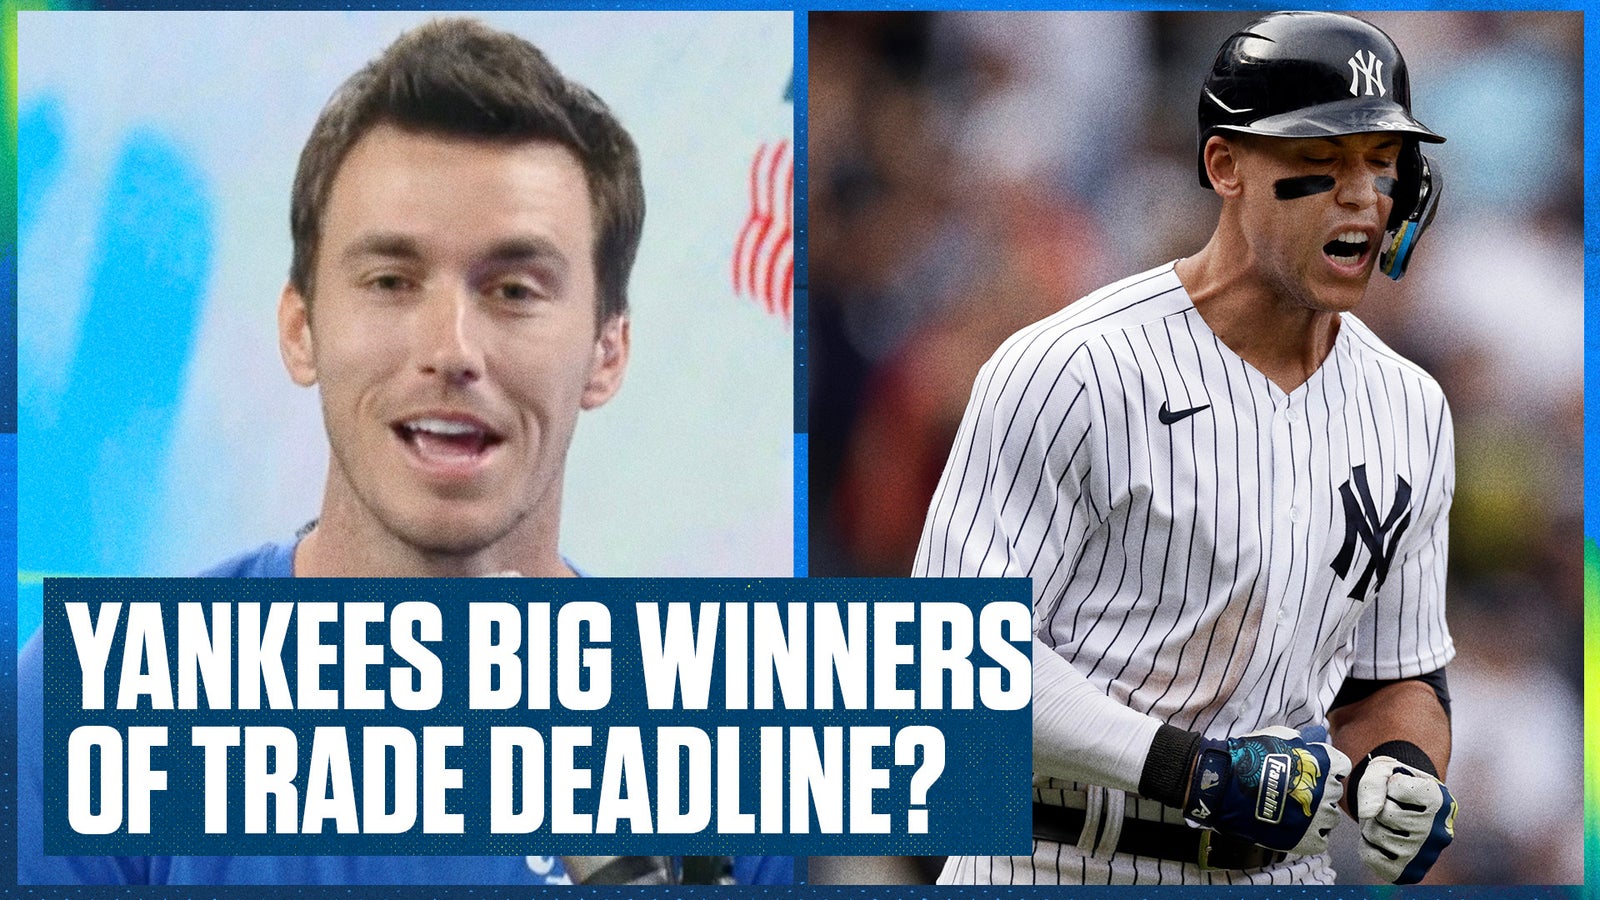 Yankees the biggest winners?